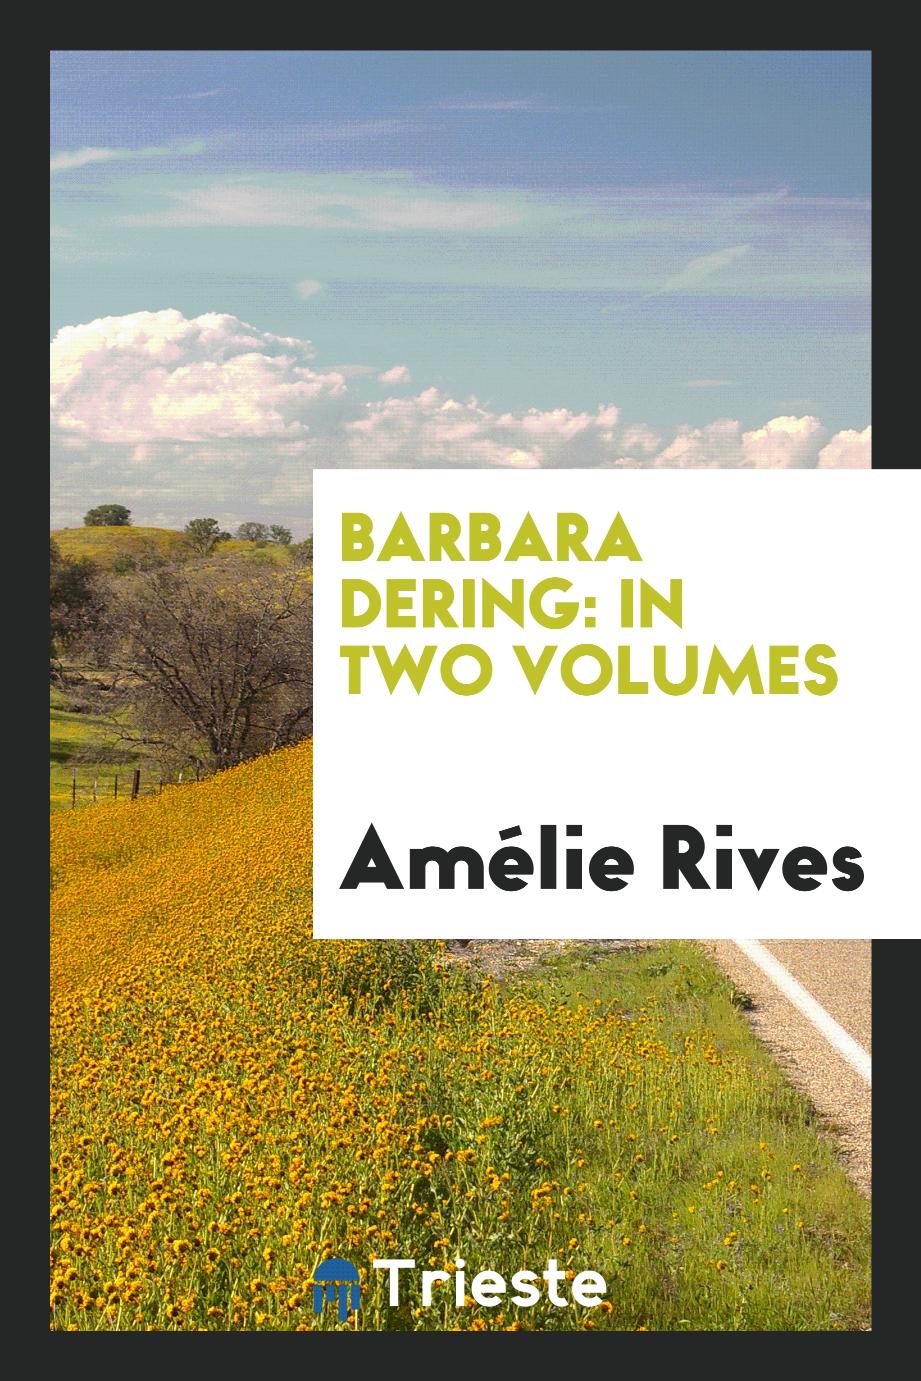 Barbara Dering: in two volumes